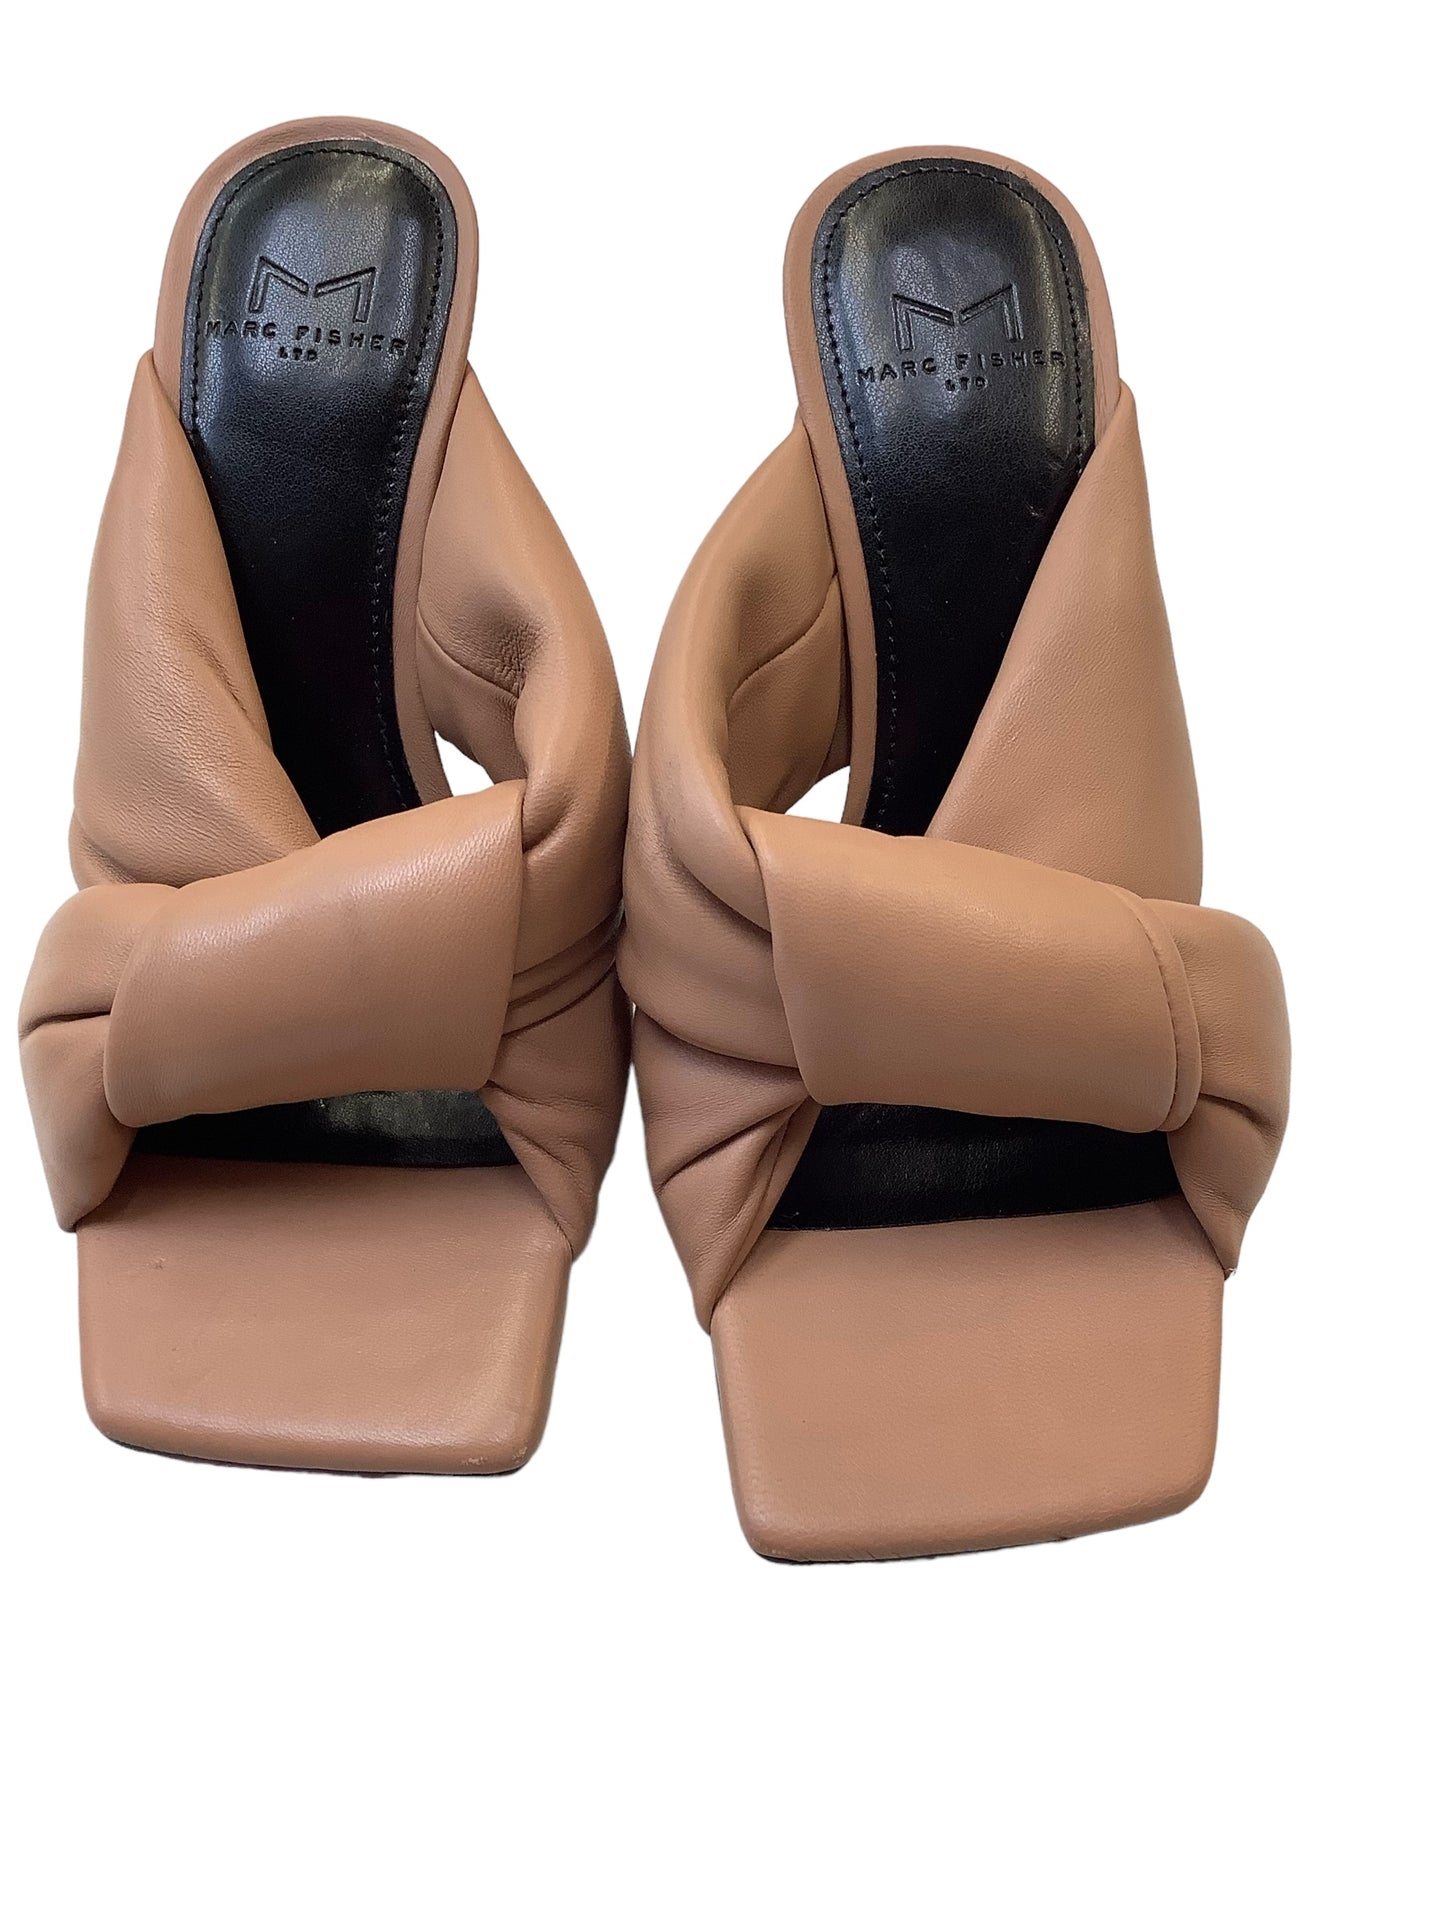 Sandals Heels Kitten By Marc Fisher  Size: 6.5